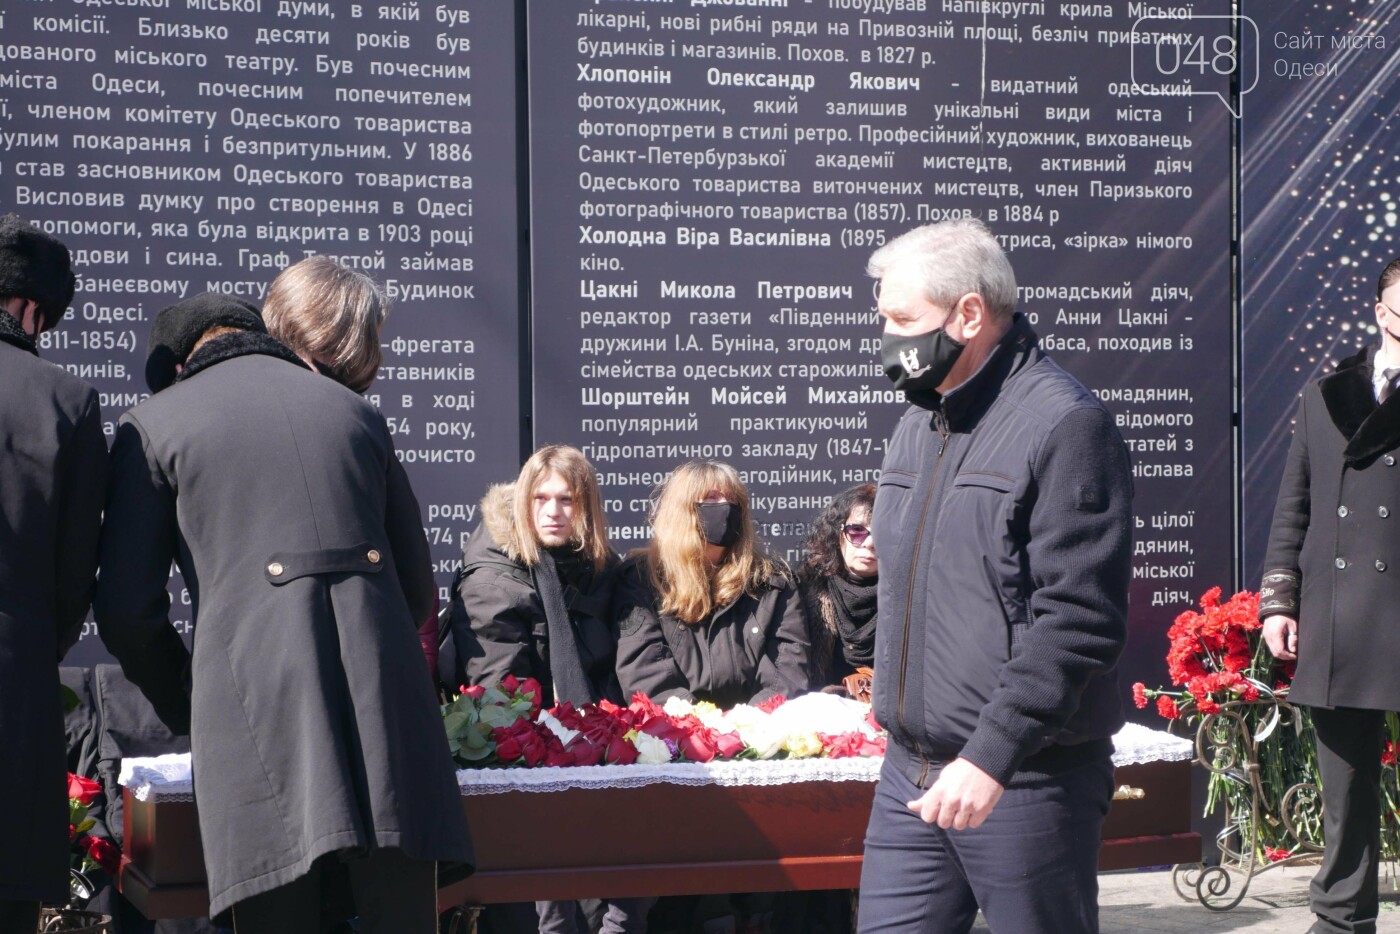 Похороны Олега Валкмана